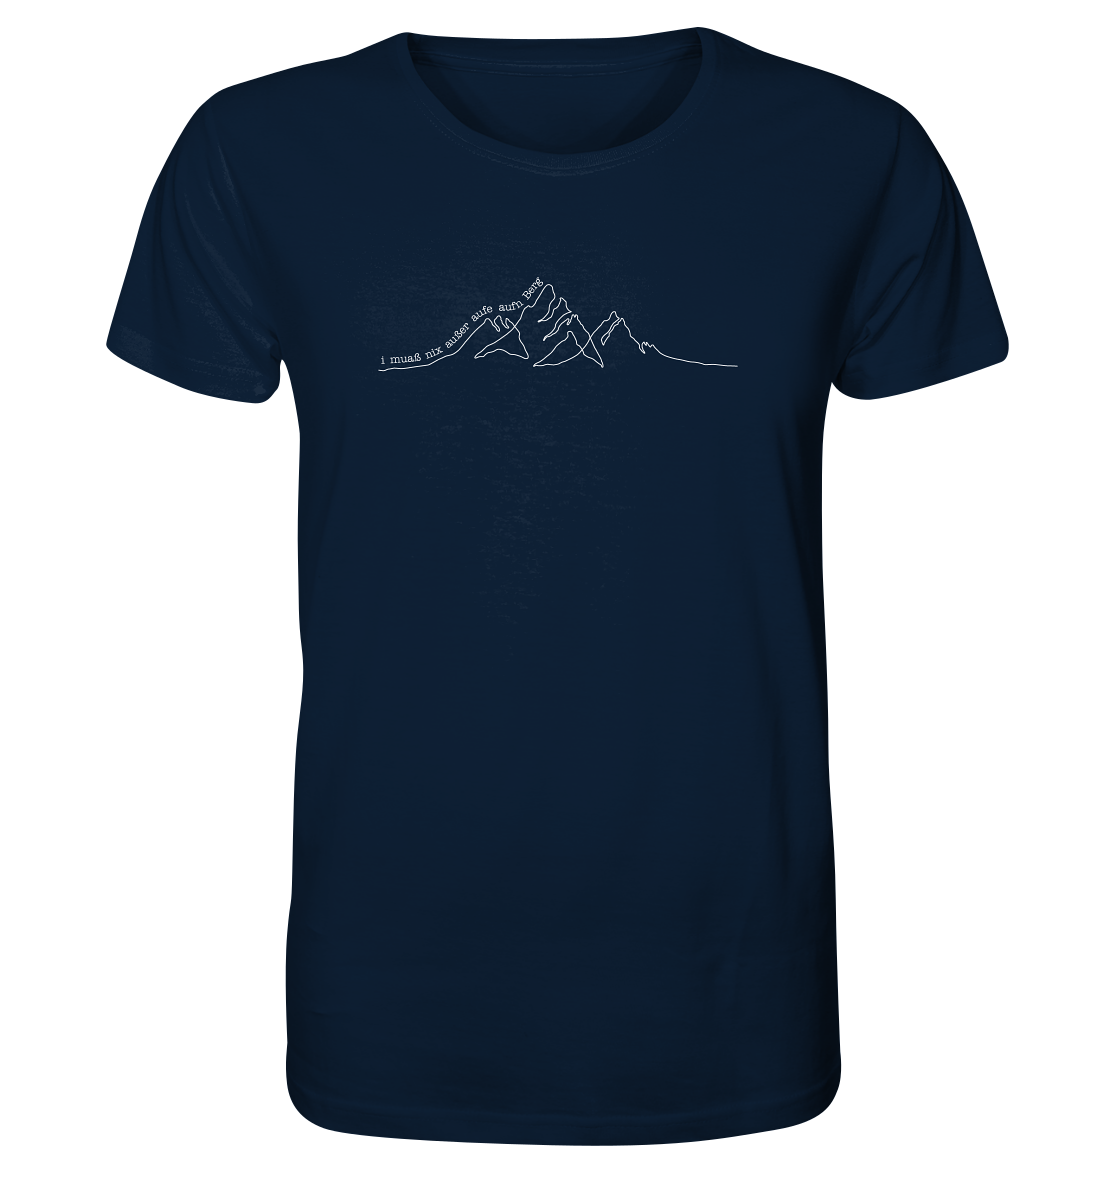 T-Shirt "Aufe aufn Berg" (Dark)